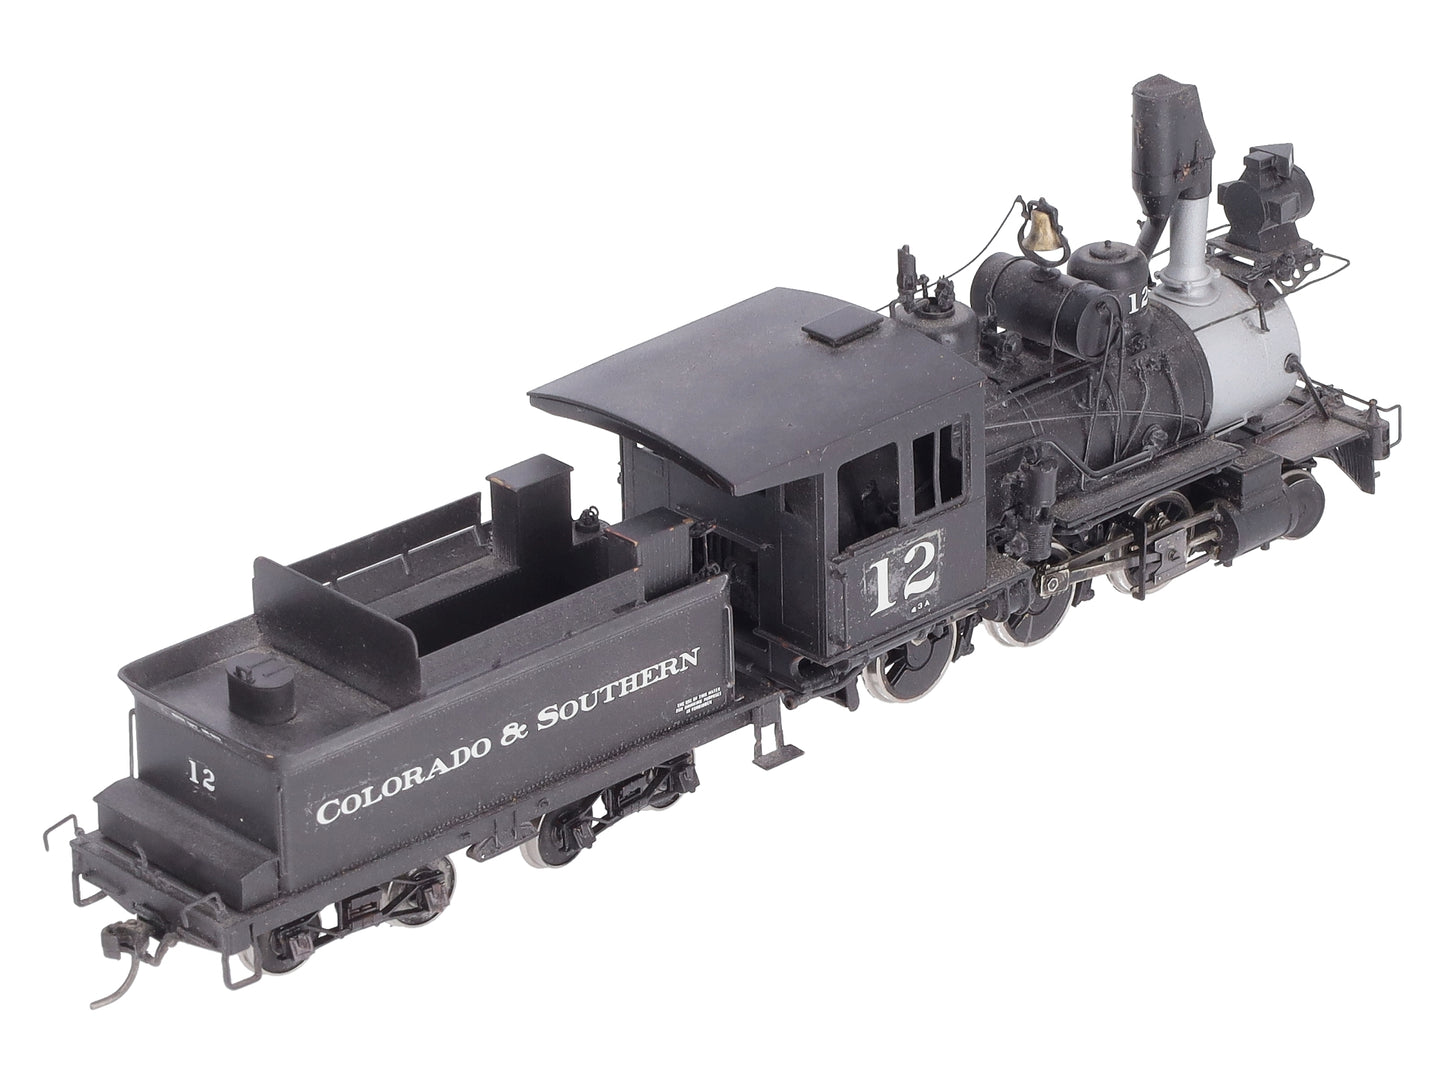 Overland 1704 Sn3 BRASS Colorado & Southern 2-6-0 Steam Locomotive #12 EX/Box